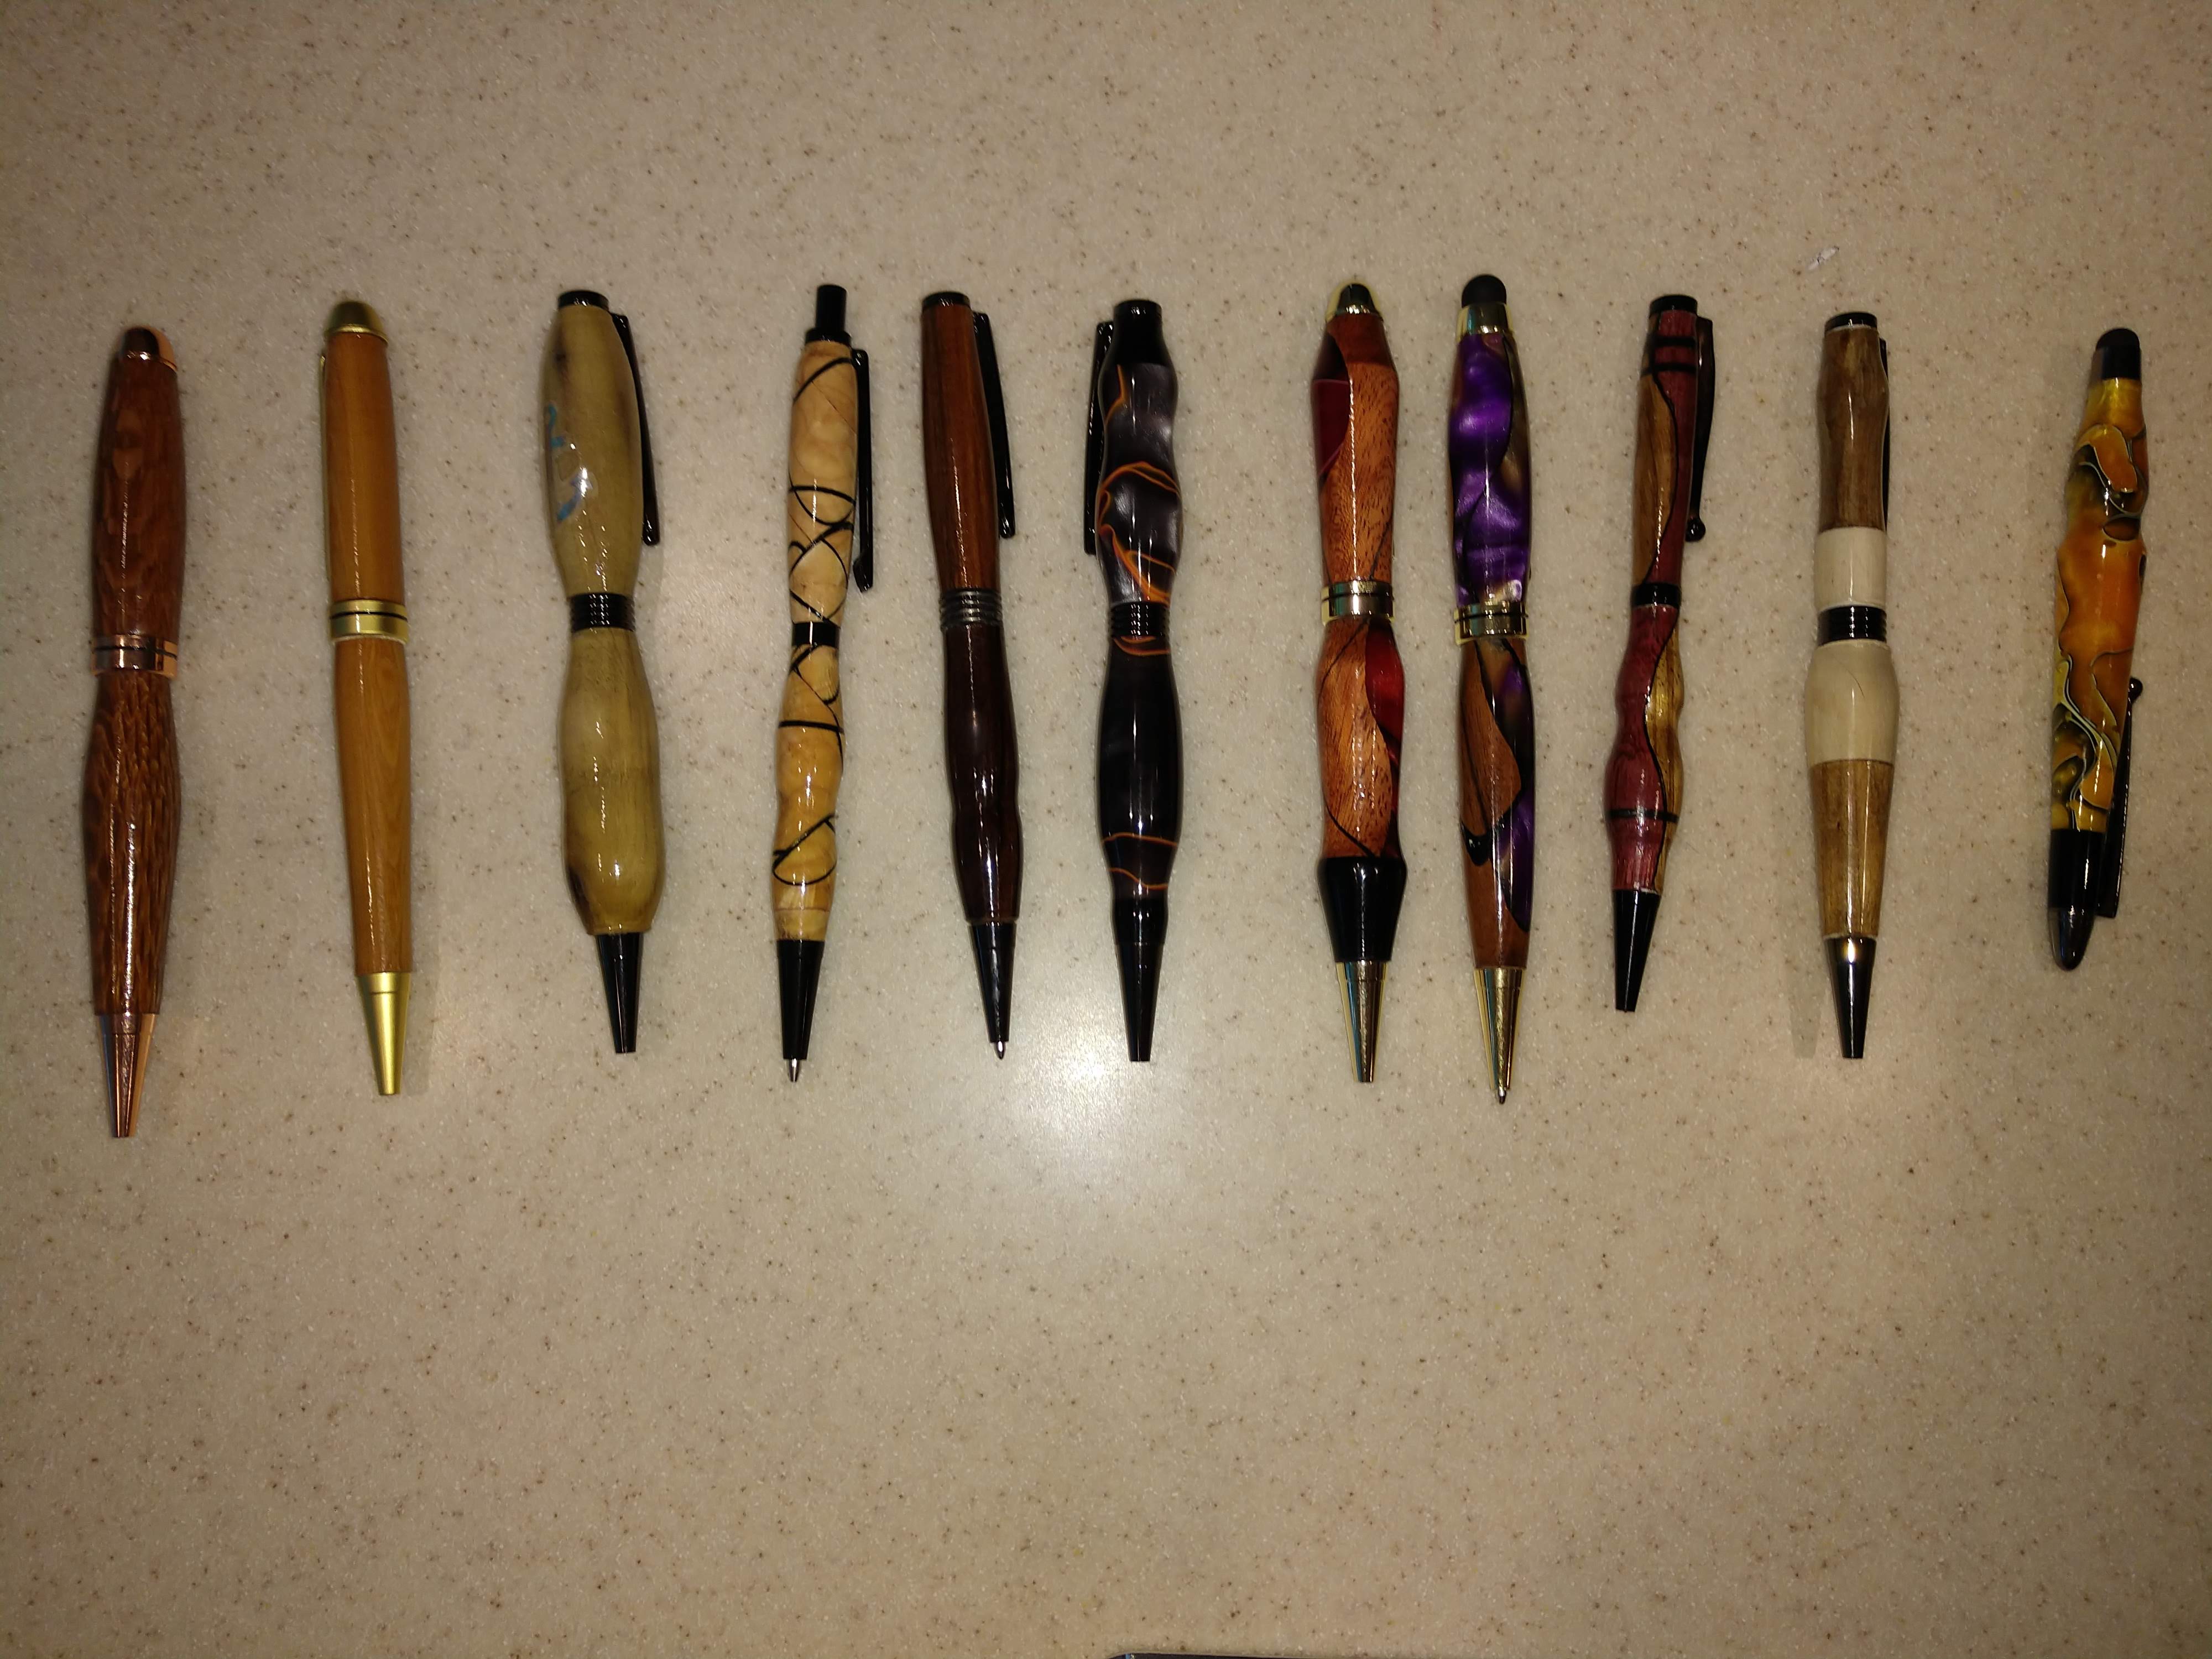 My pens